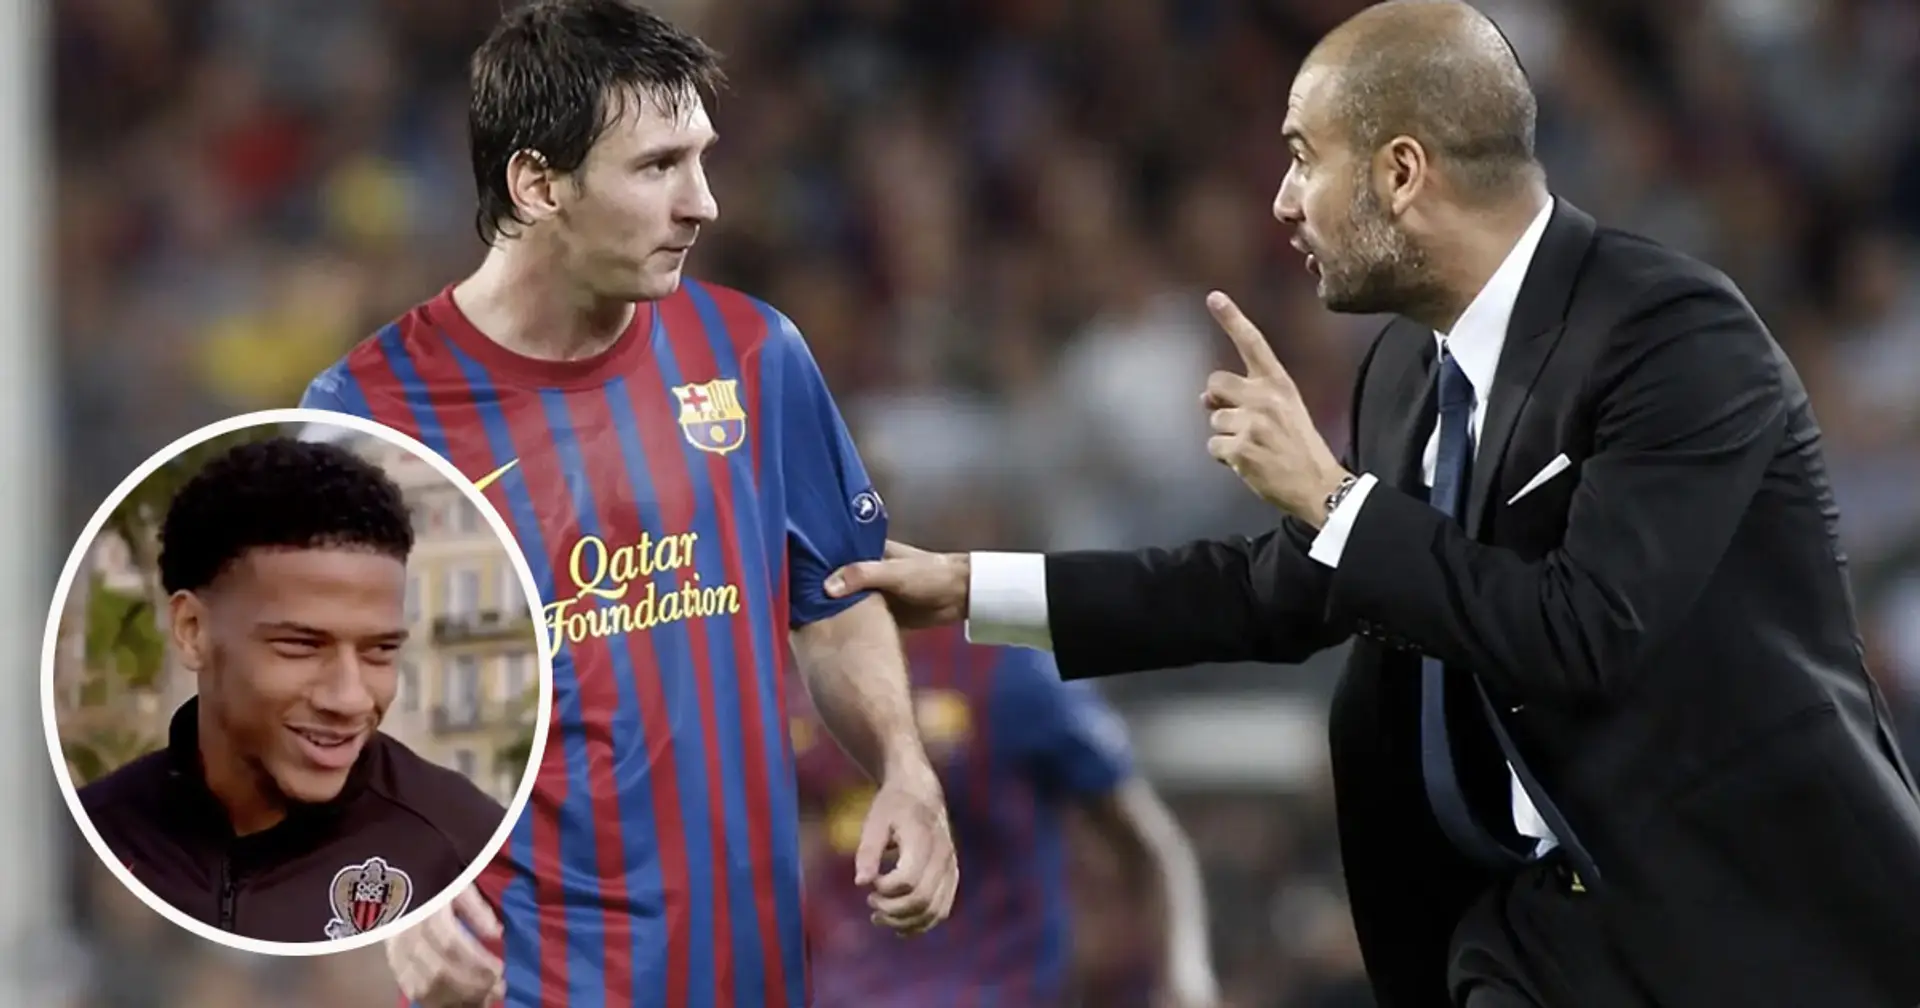 'We were forbidden to do that!': ex-Blaugrana reveals strange training rule involving Messi